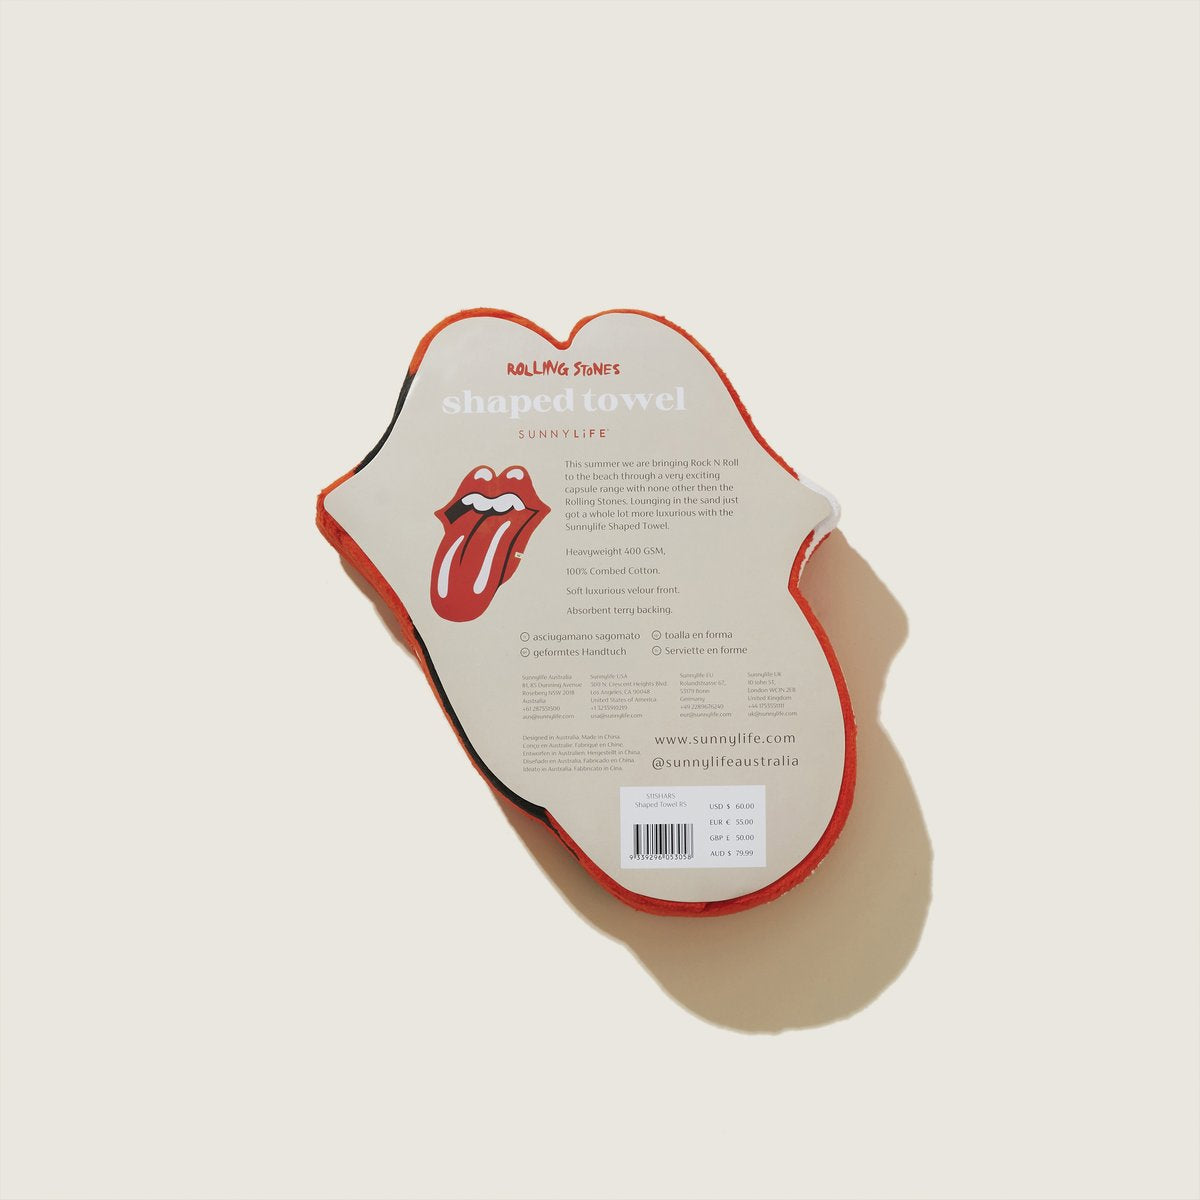 SunnyLife Shaped Towel - Rolling Stones